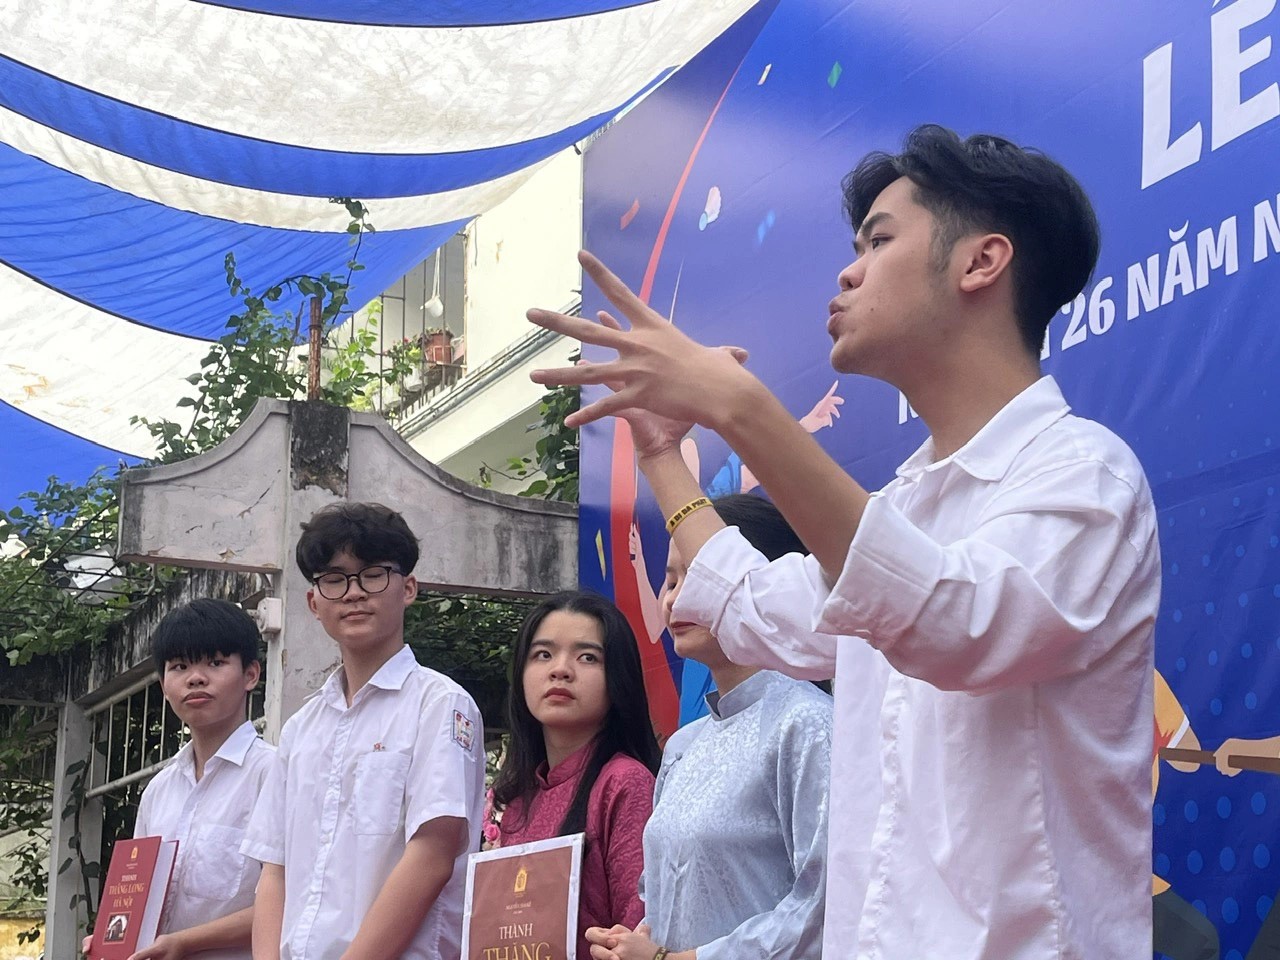 Sign language book reviews: Bridging communication through literature in Hanoi